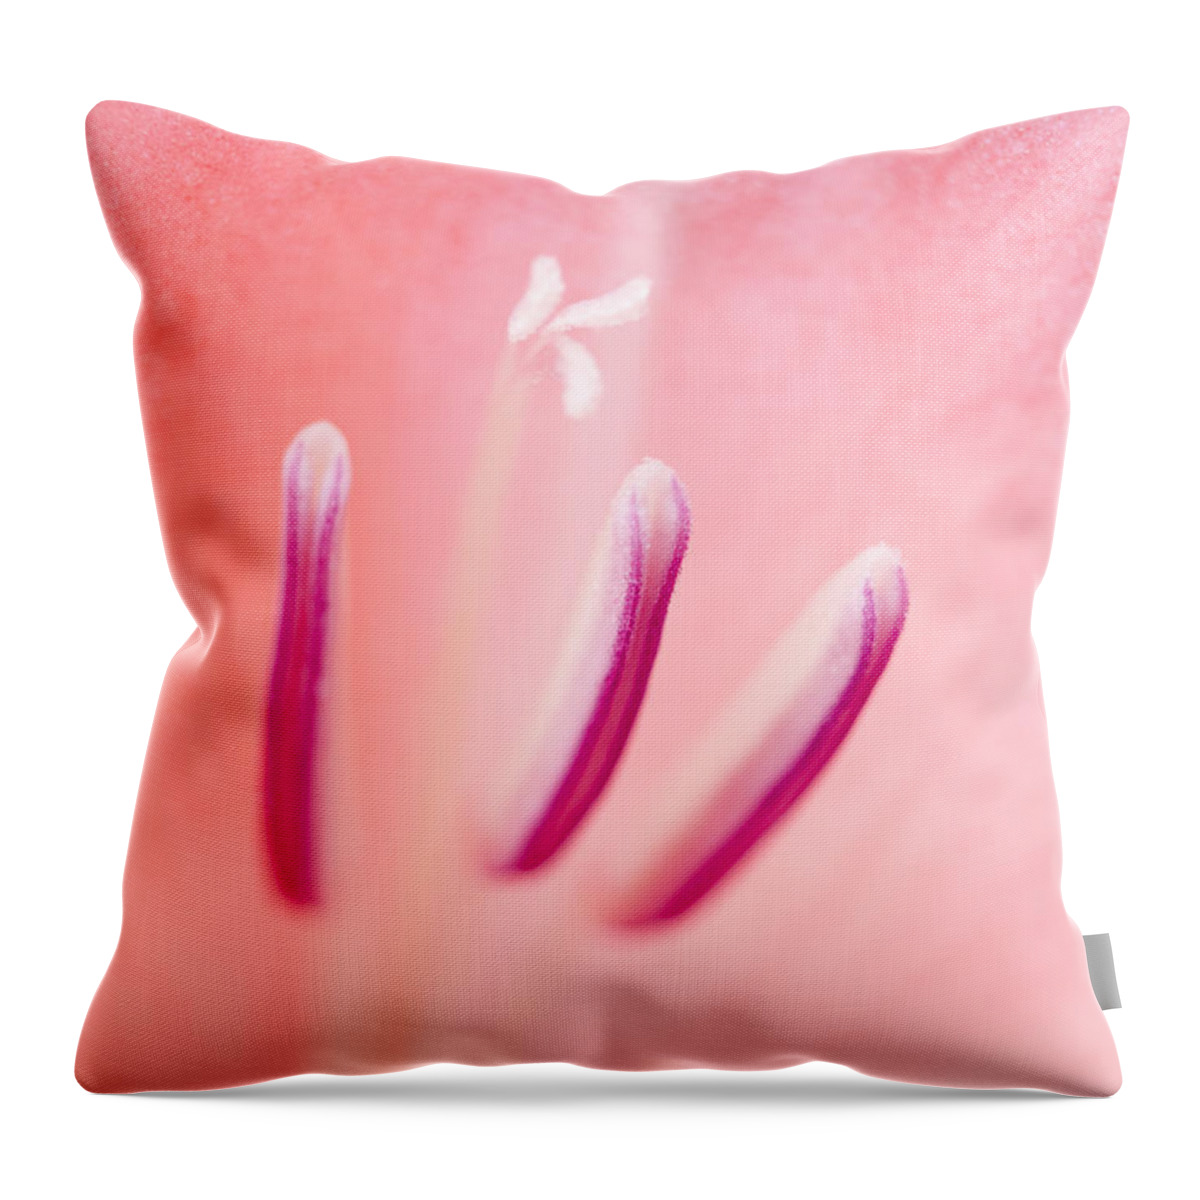 Astoria Throw Pillow featuring the photograph Pink and Close by Robert Potts